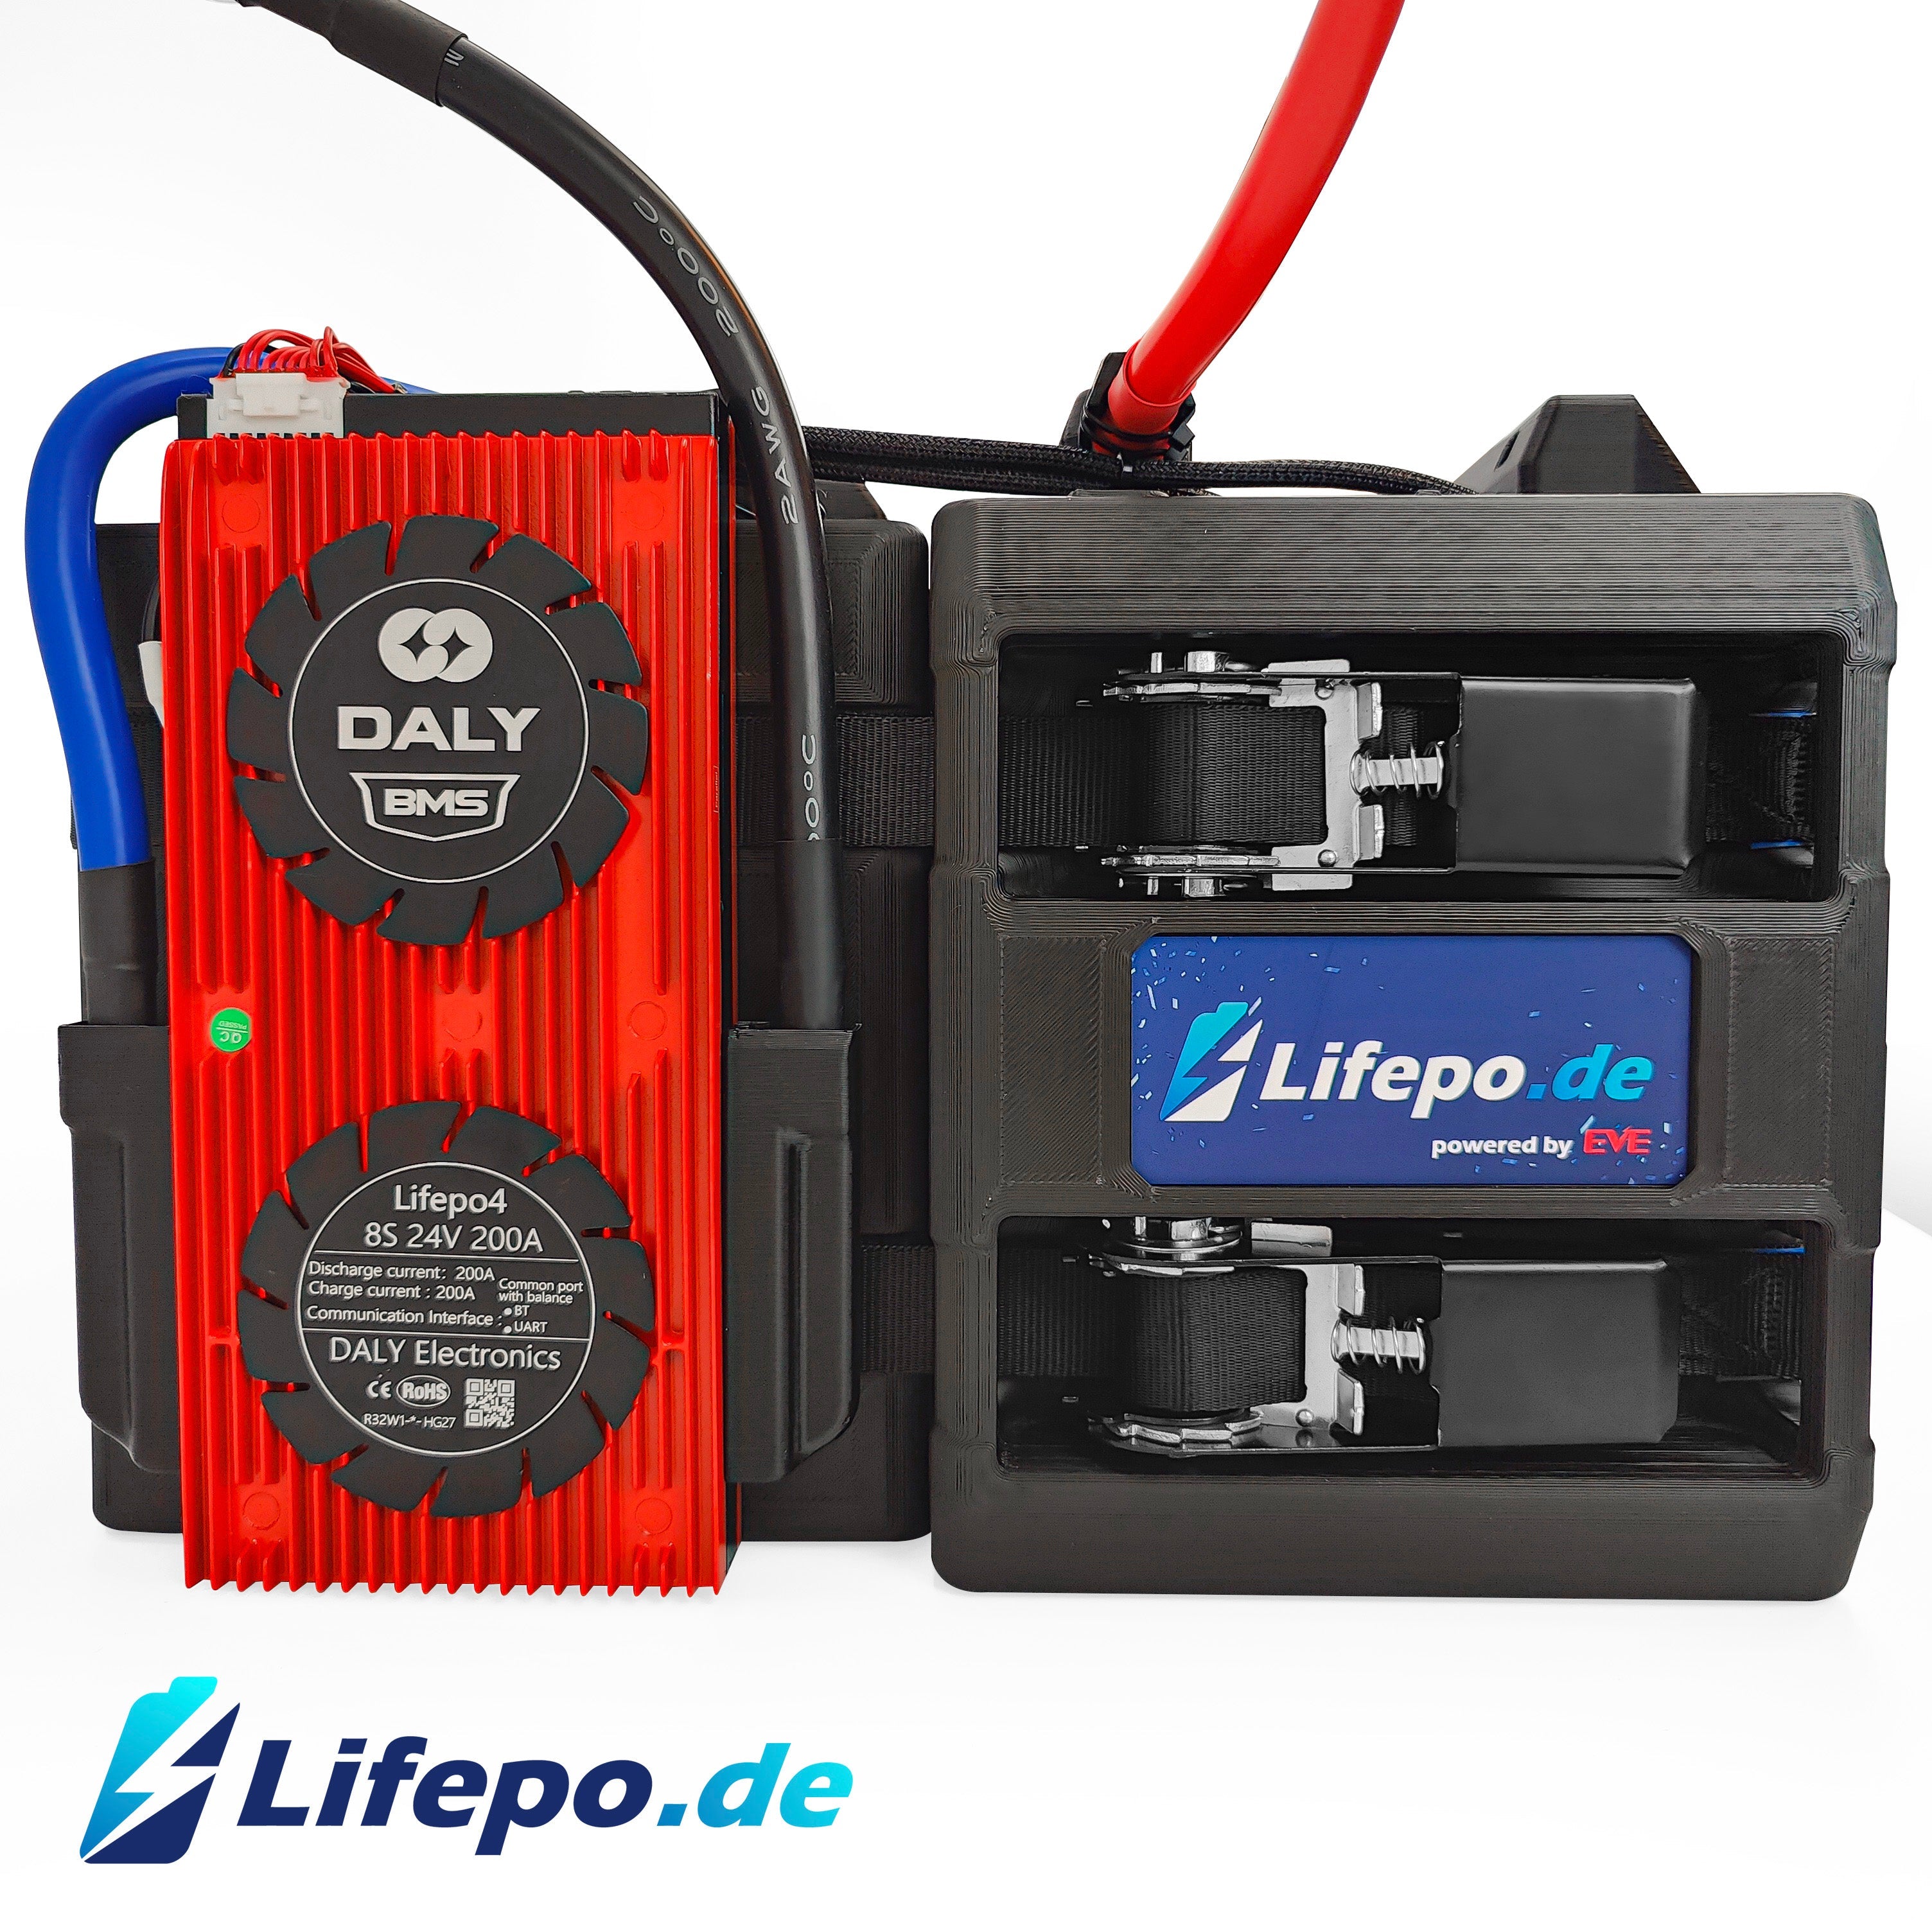 0% MwSt 24v 560Ah Lifepo4 Batteriesystem mit EVE Grade A+ 15,2kWh